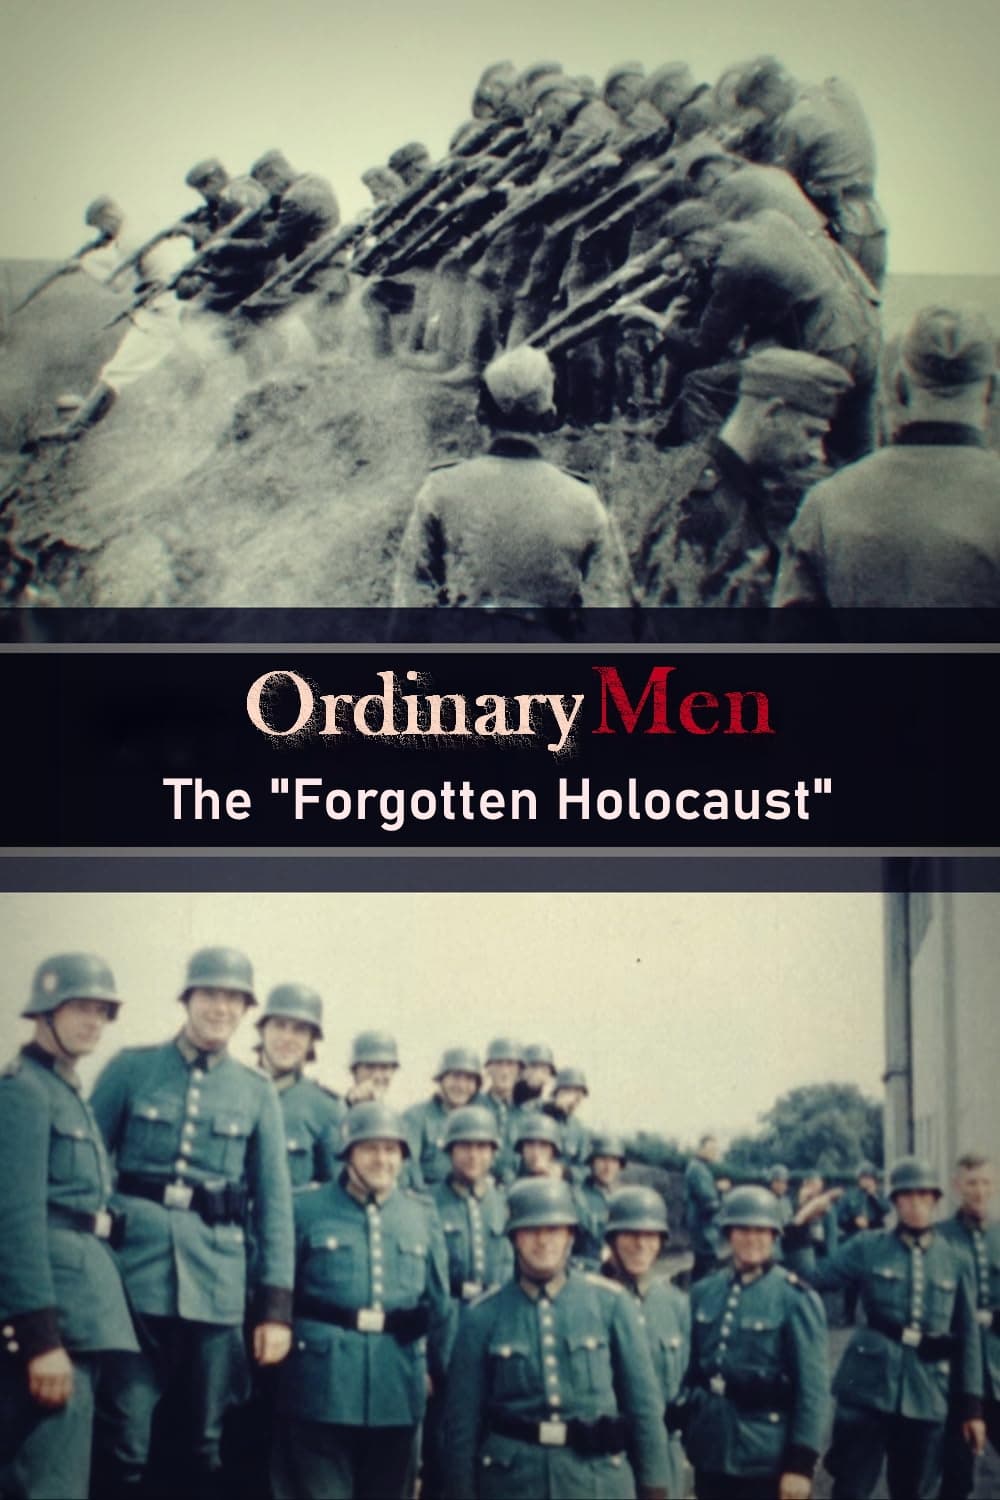 Quite Normal Men: The "Forgotten Holocaust"